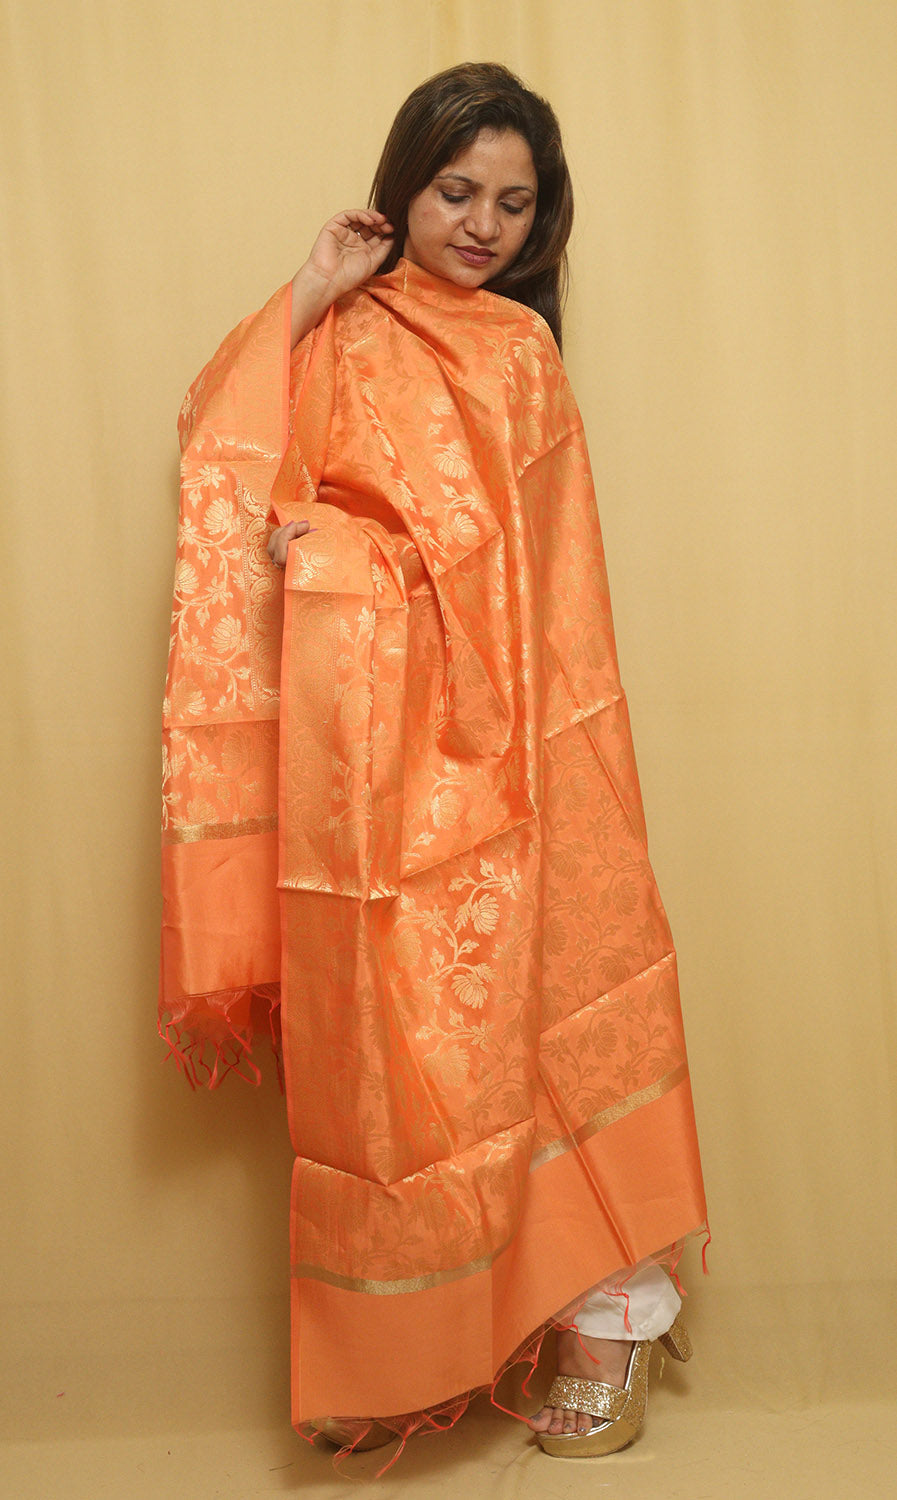 Get Glamorous with Orange Banarasi Silk Dupatta - Ideal for Every Event! - Luxurion World